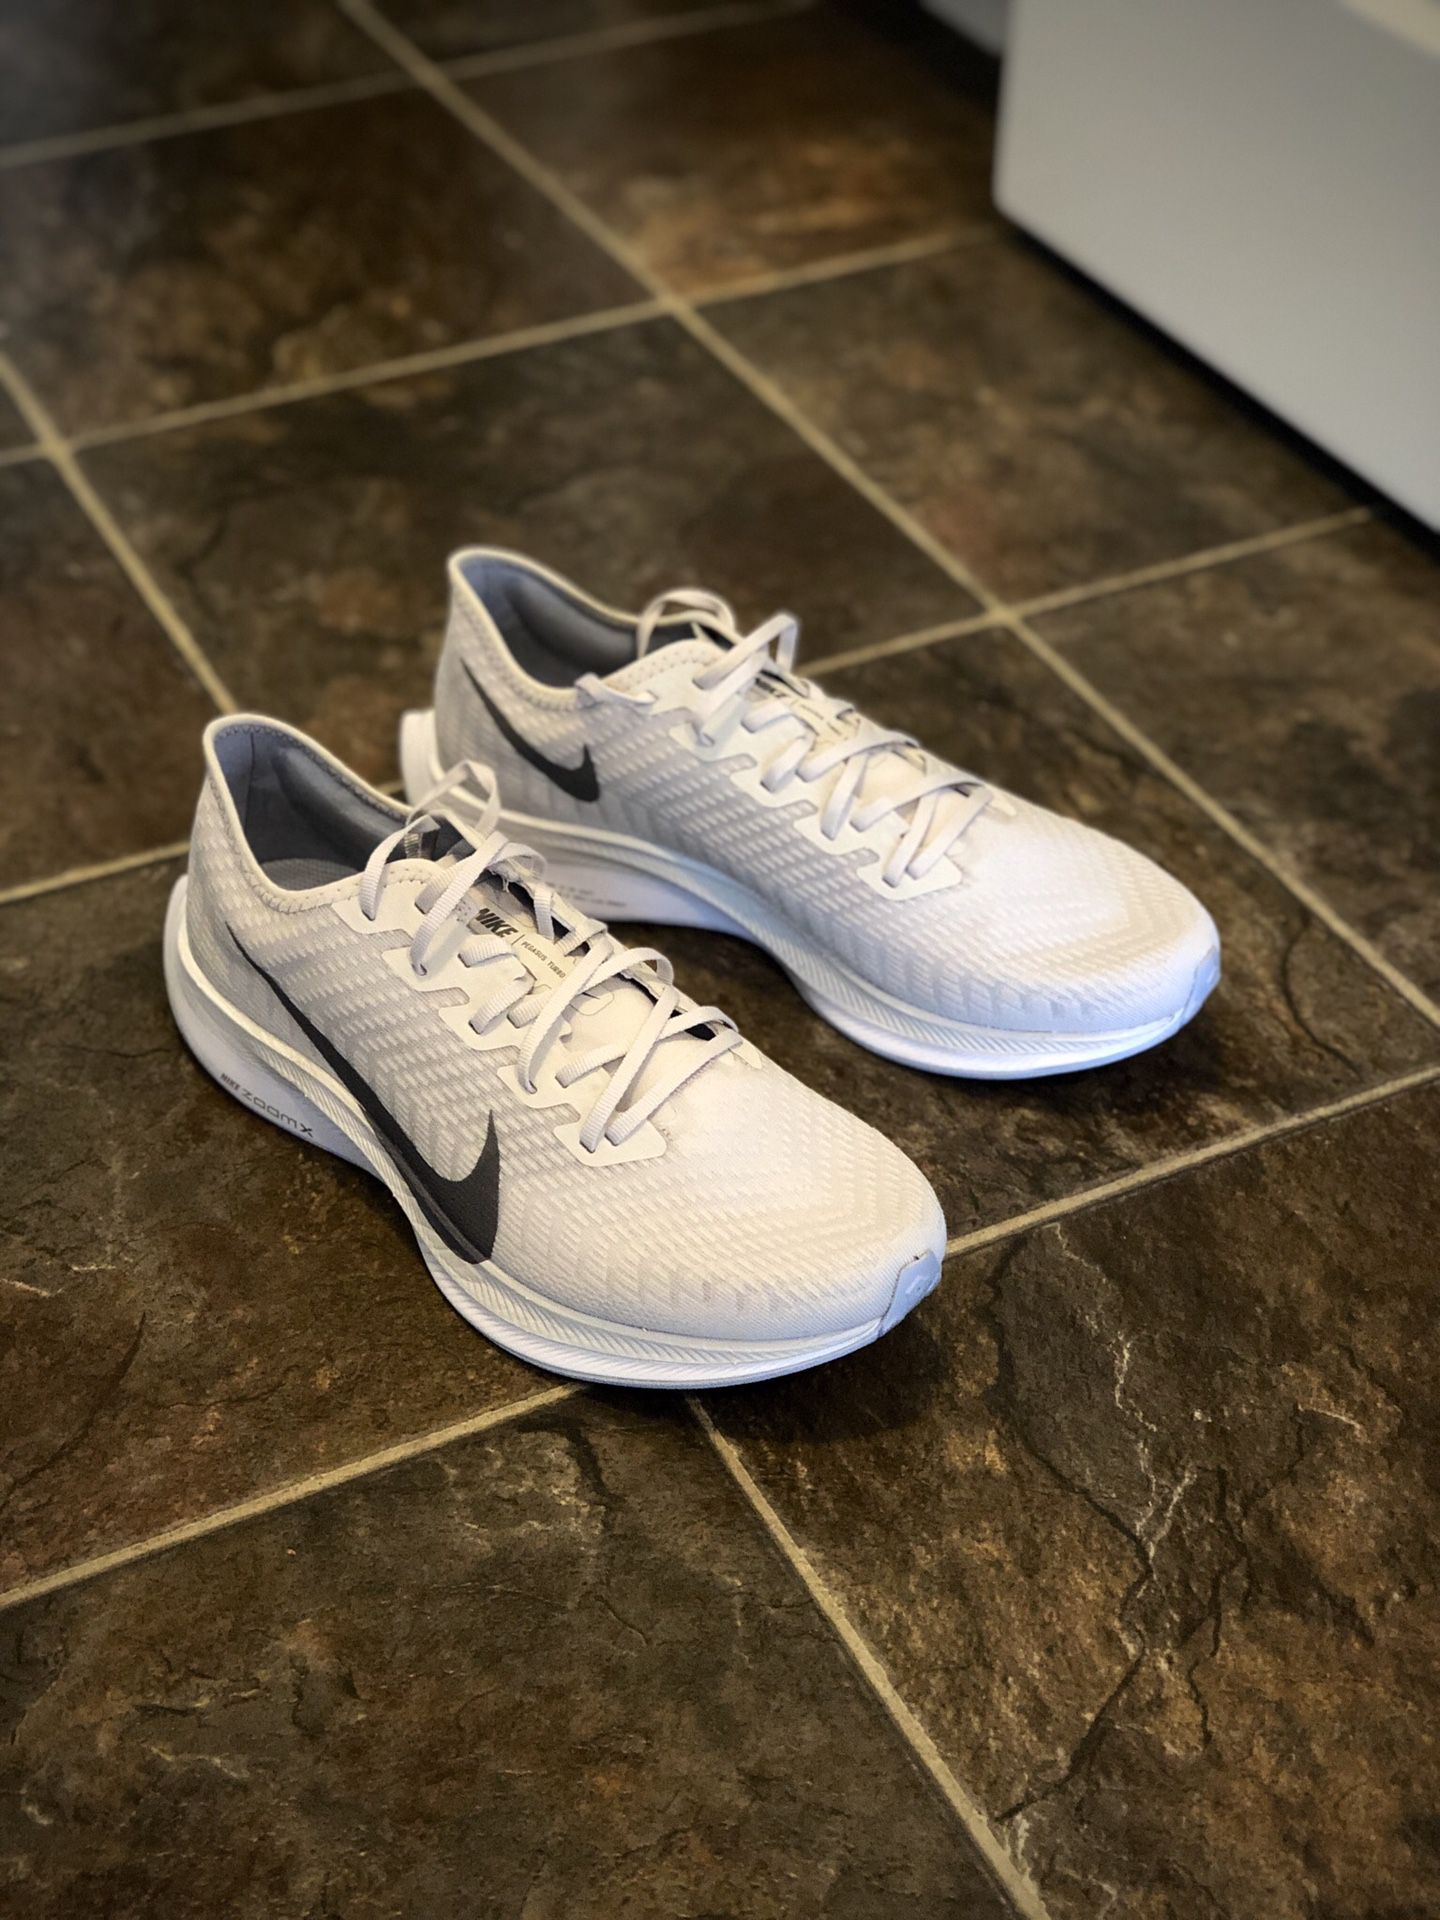 Nike Zoom Pegasus Turbo 2 running shoes, size 11